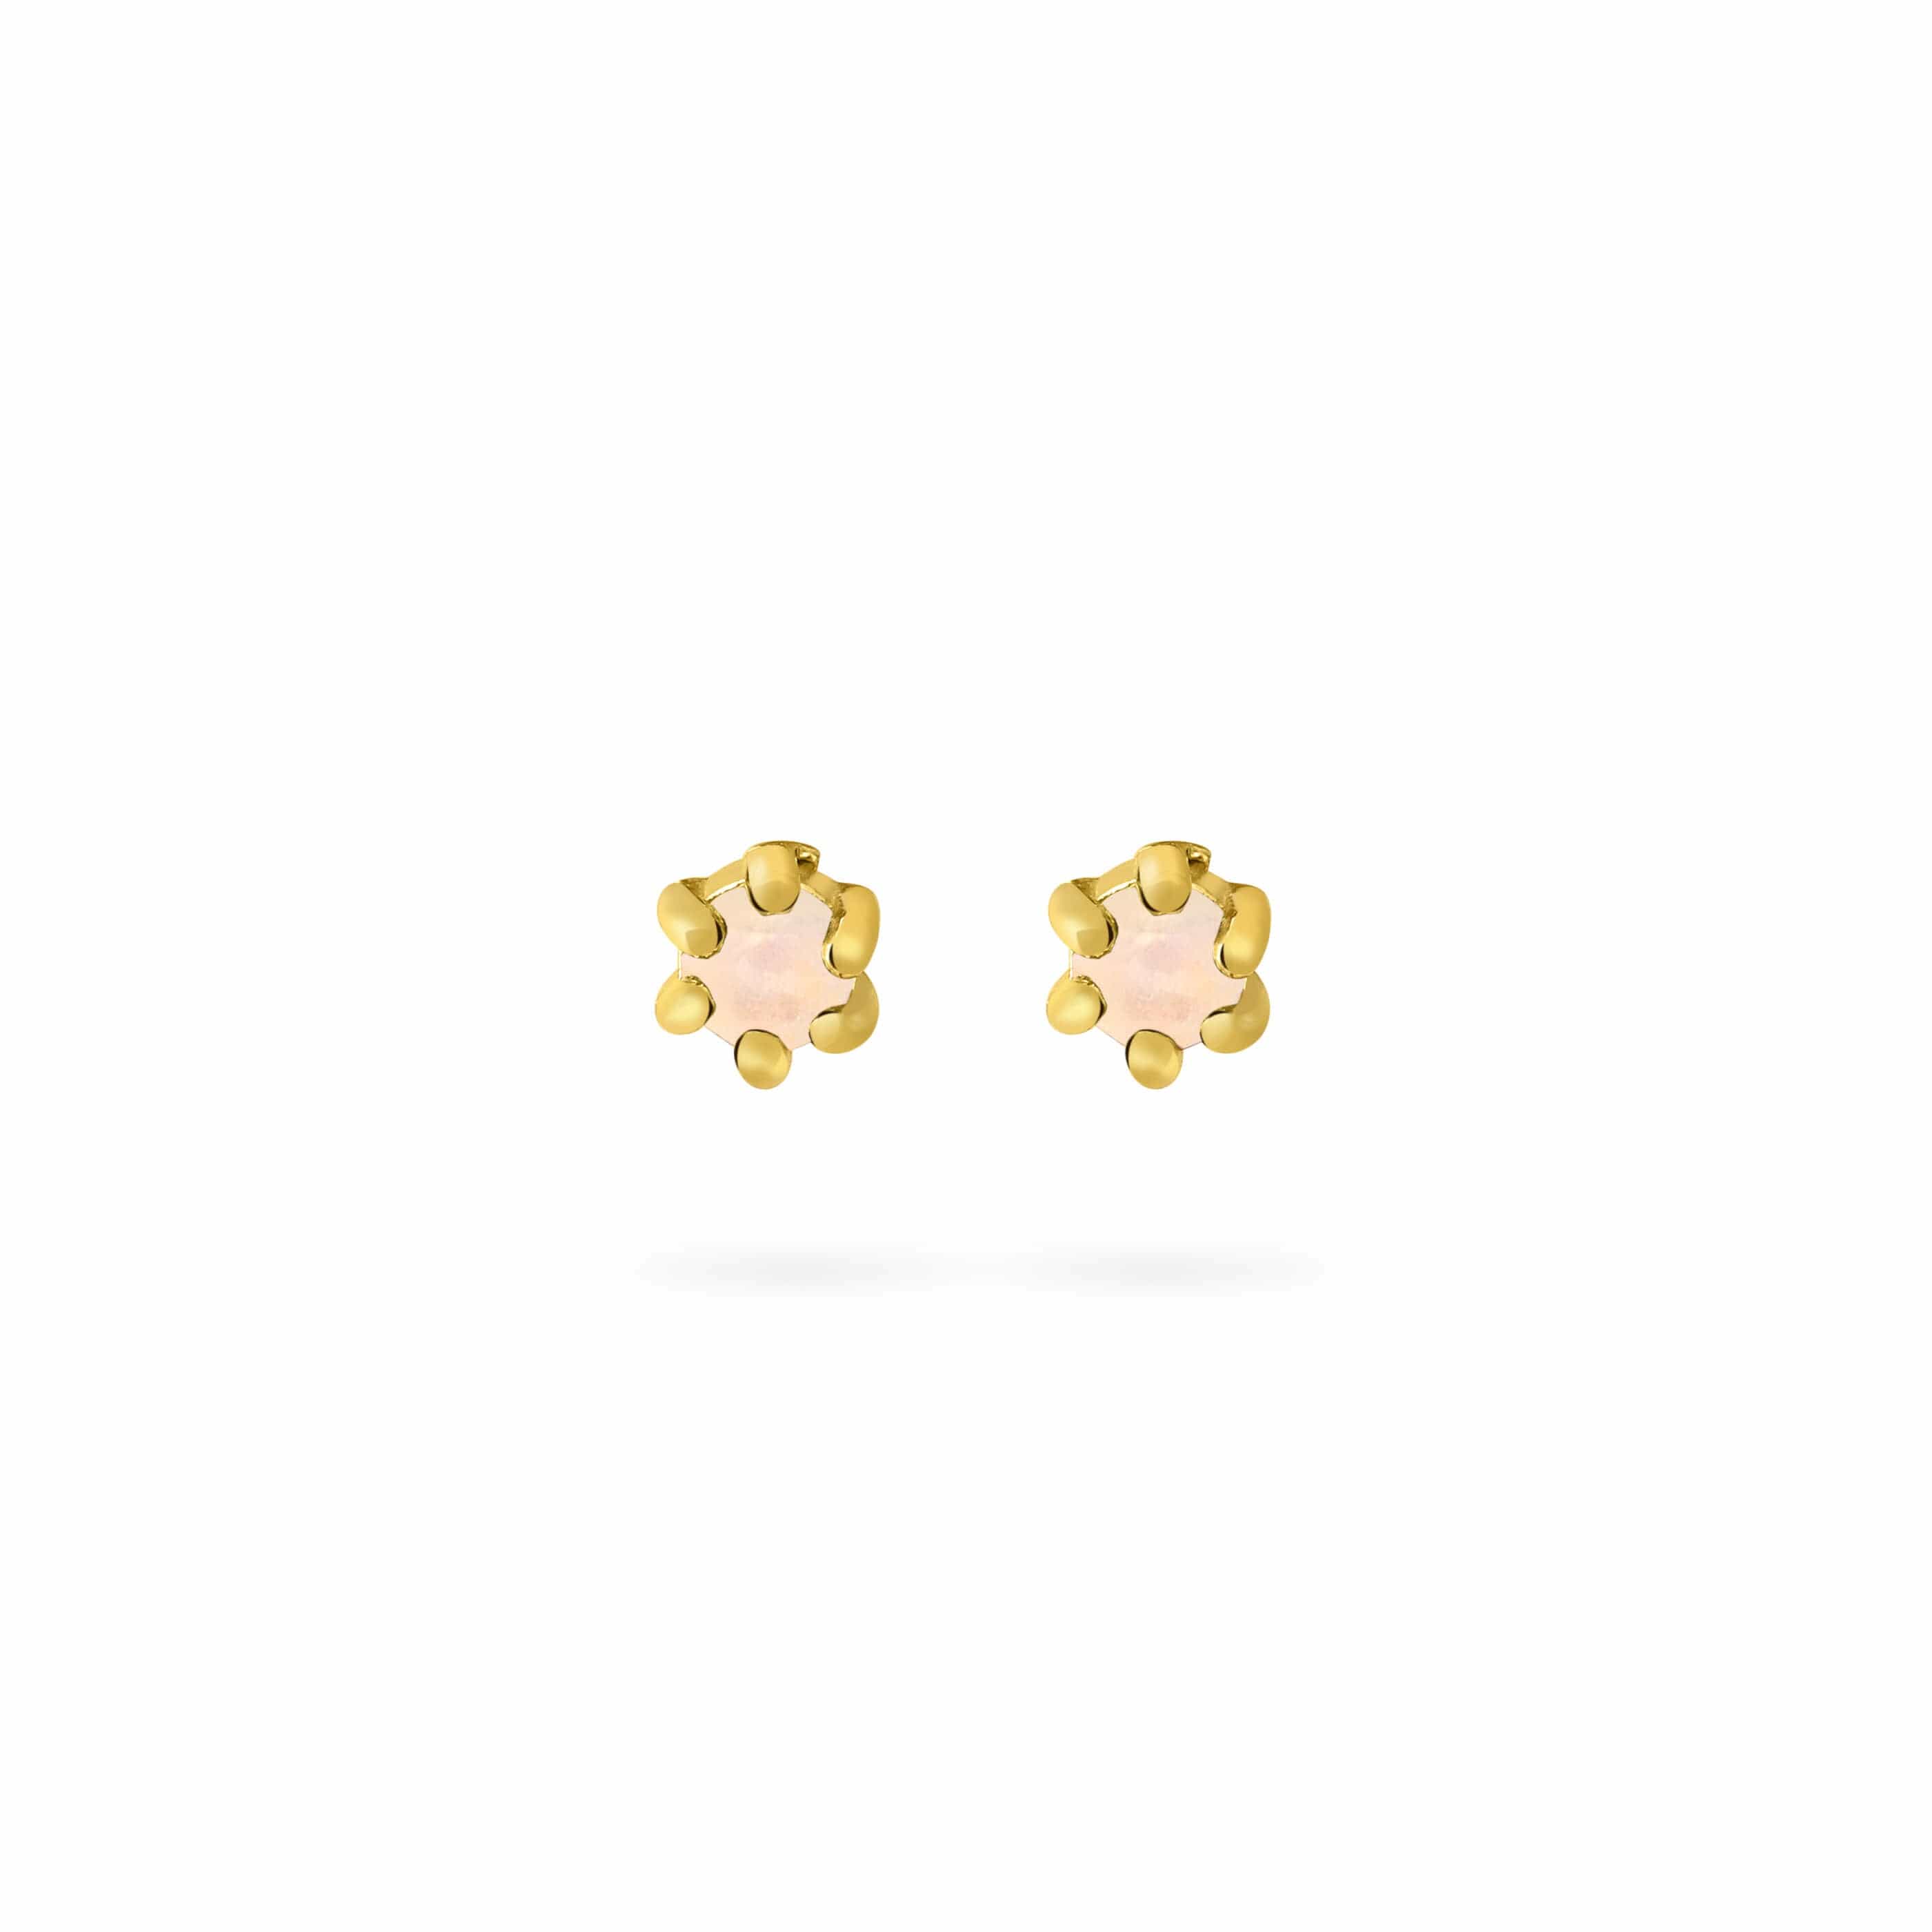 Moonstone Stud Earrings Gold Plated